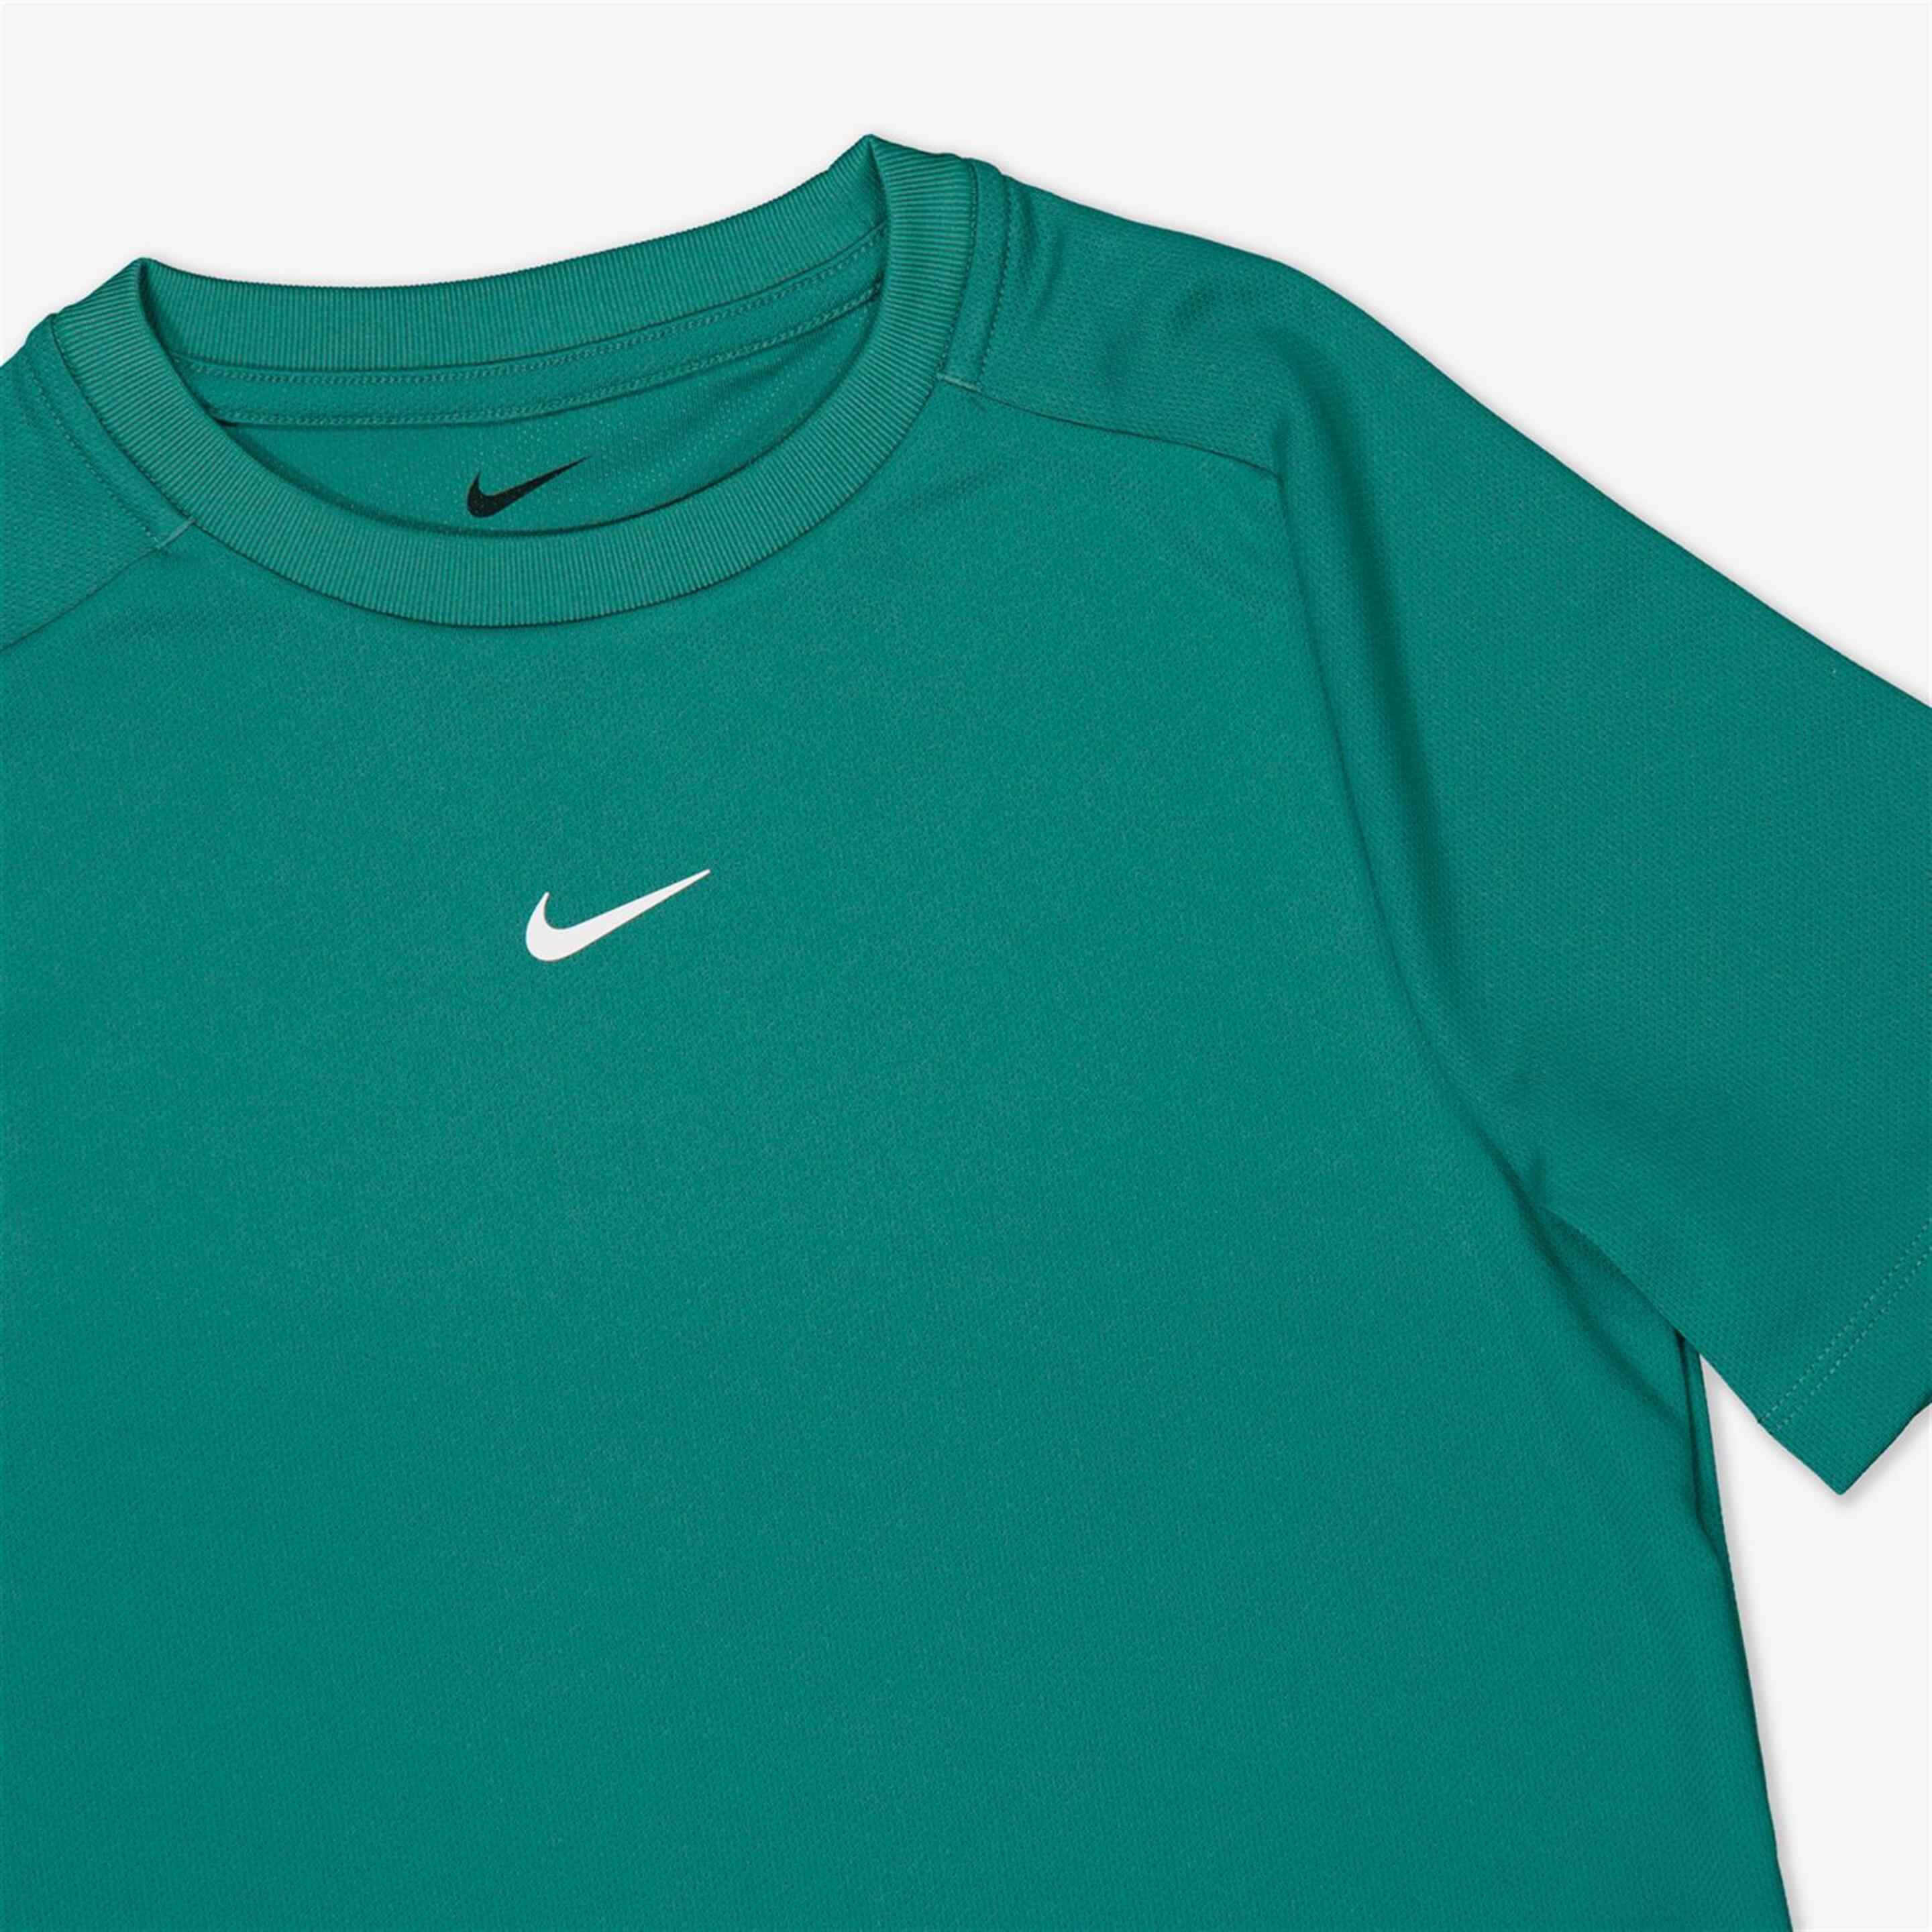 Camiseta Nike - Kaki - Camiseta Running Hombre